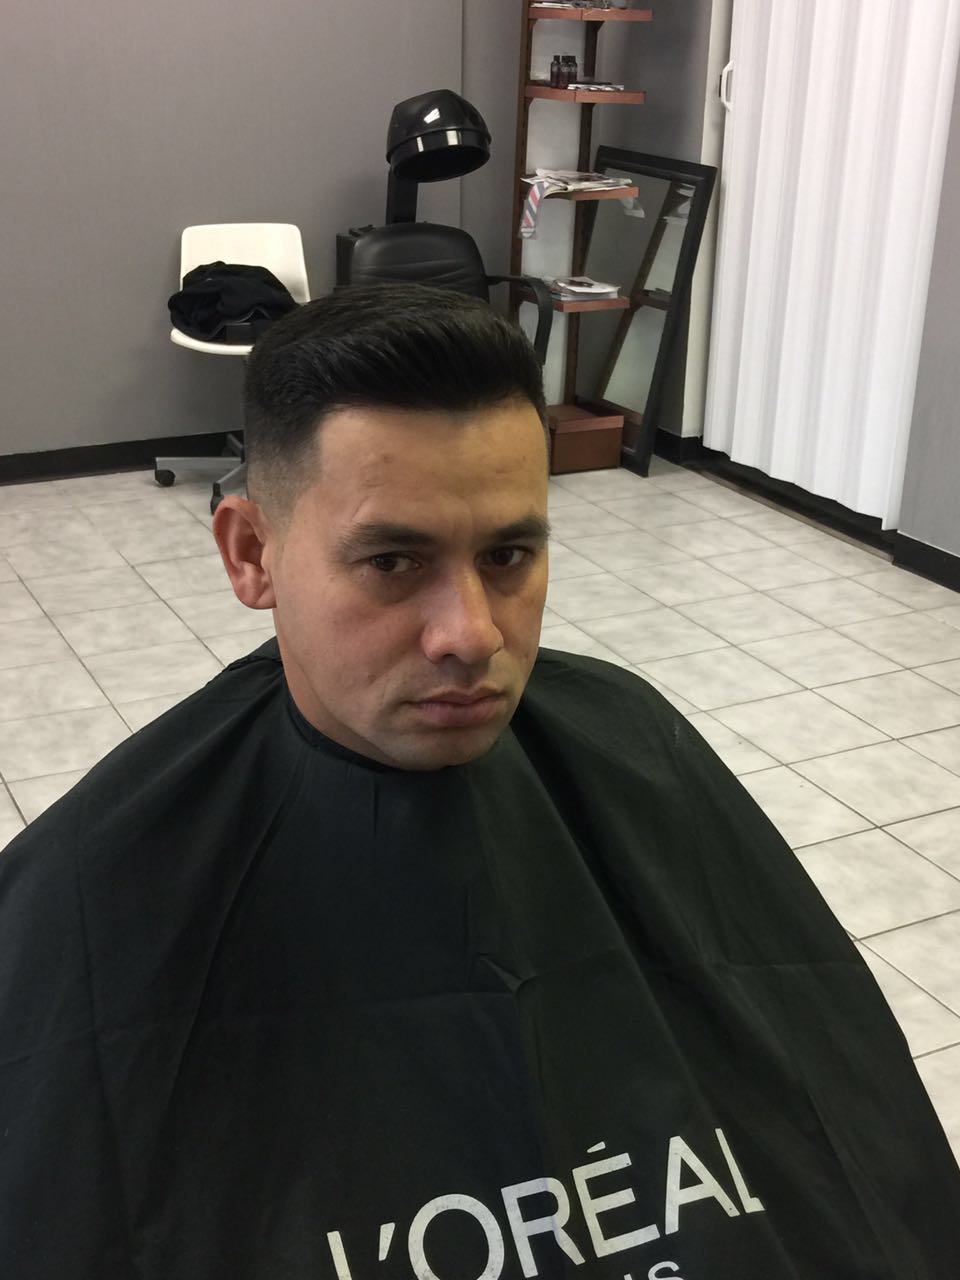 Eastside Barbershop | hair care | 5019 118 Ave NW, Edmonton, AB T5W 1B8, Canada | 5875243278 OR +1 587-524-3278